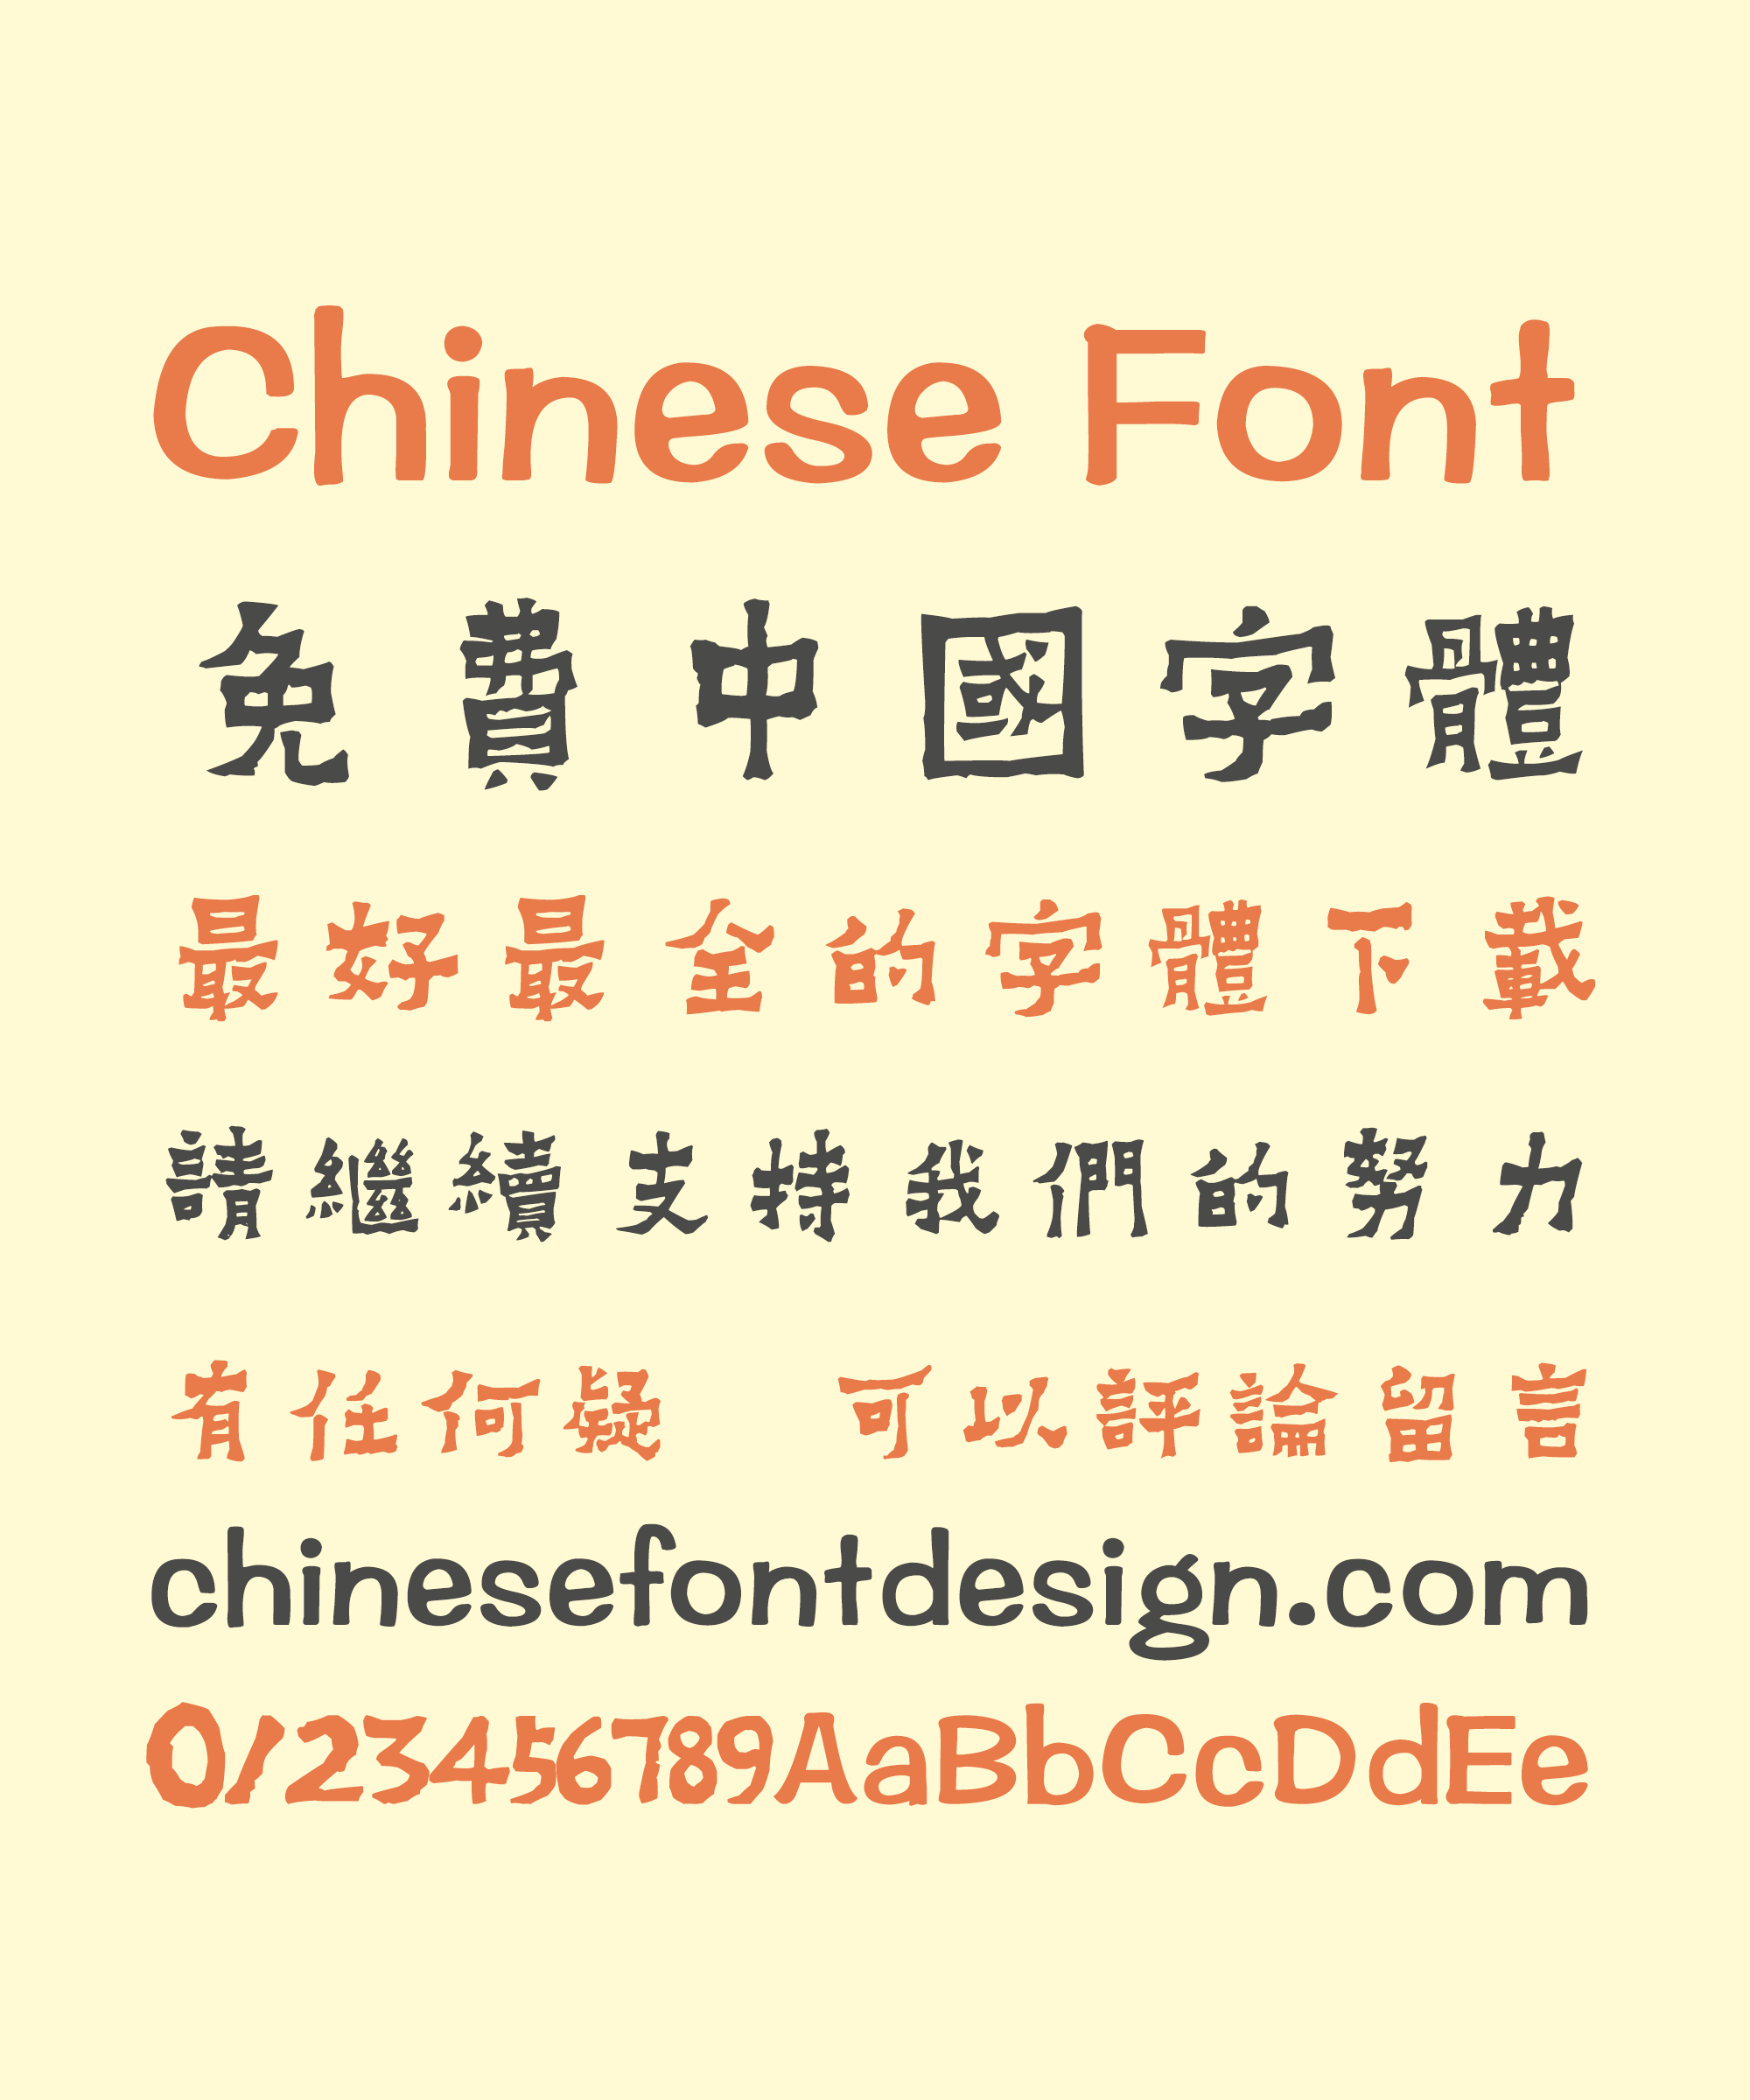 adobe acrobat dc chinese font pack download